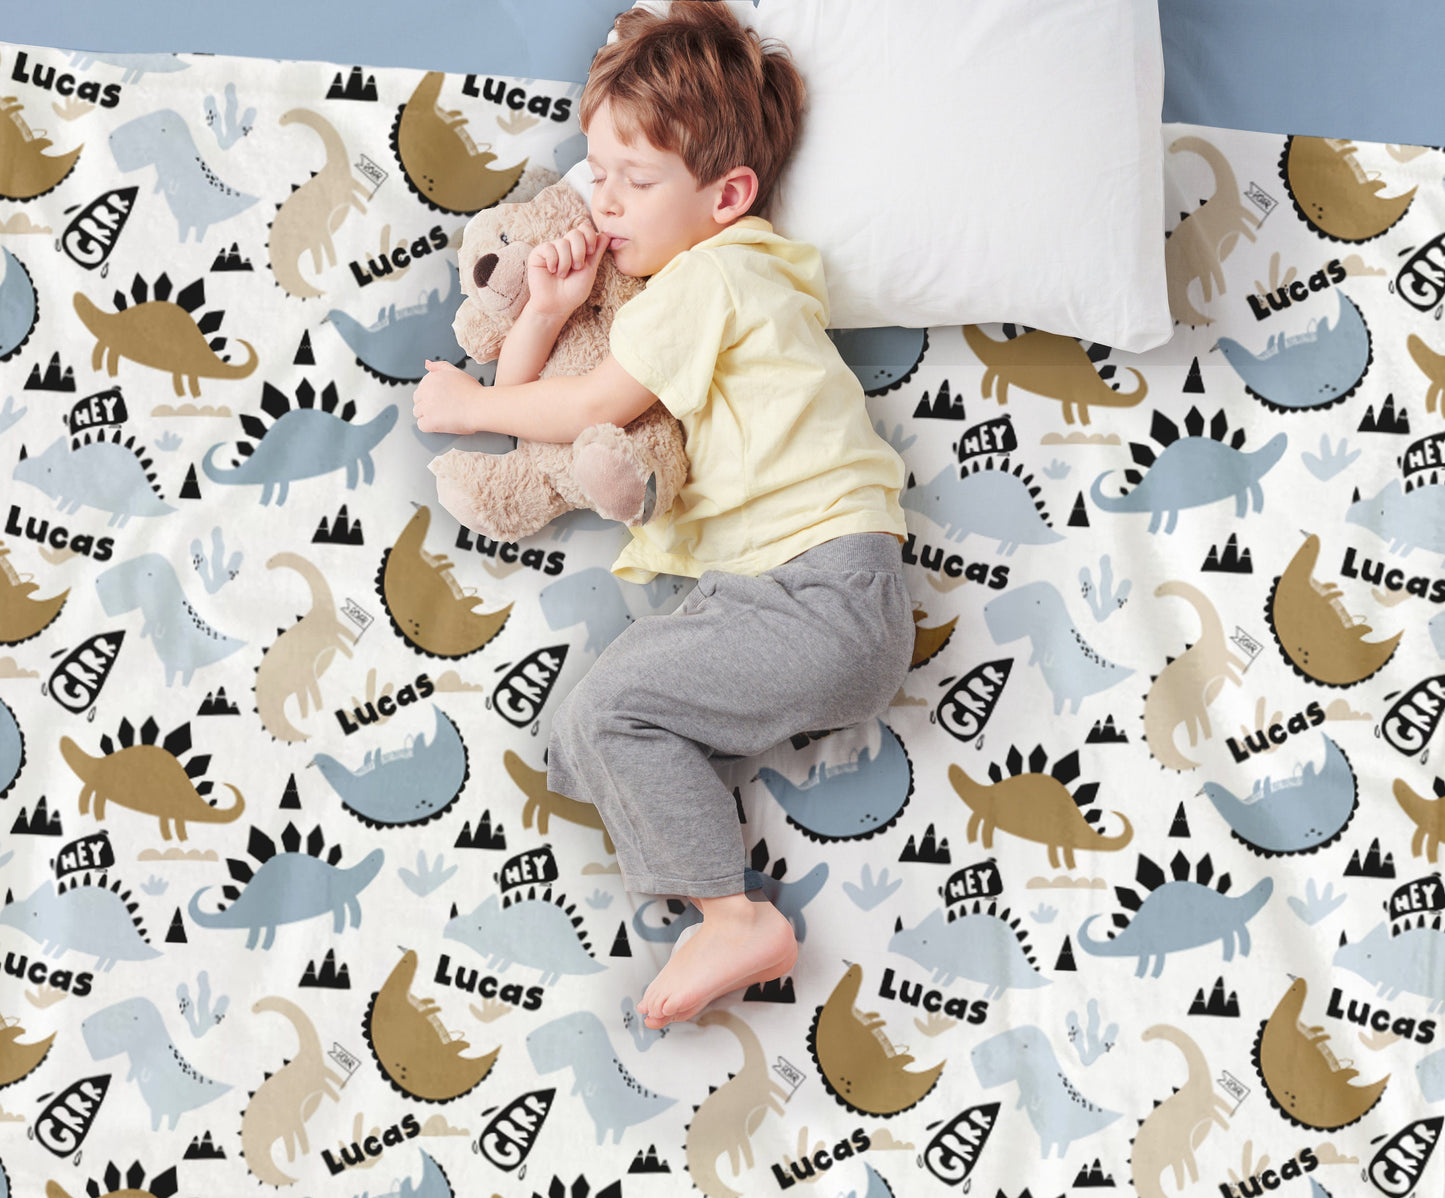 Kids Animal Design Personalize blanket, Minky or Sherpa custom blanket, Baby blanket, Kids Blanket, birthday gift idea